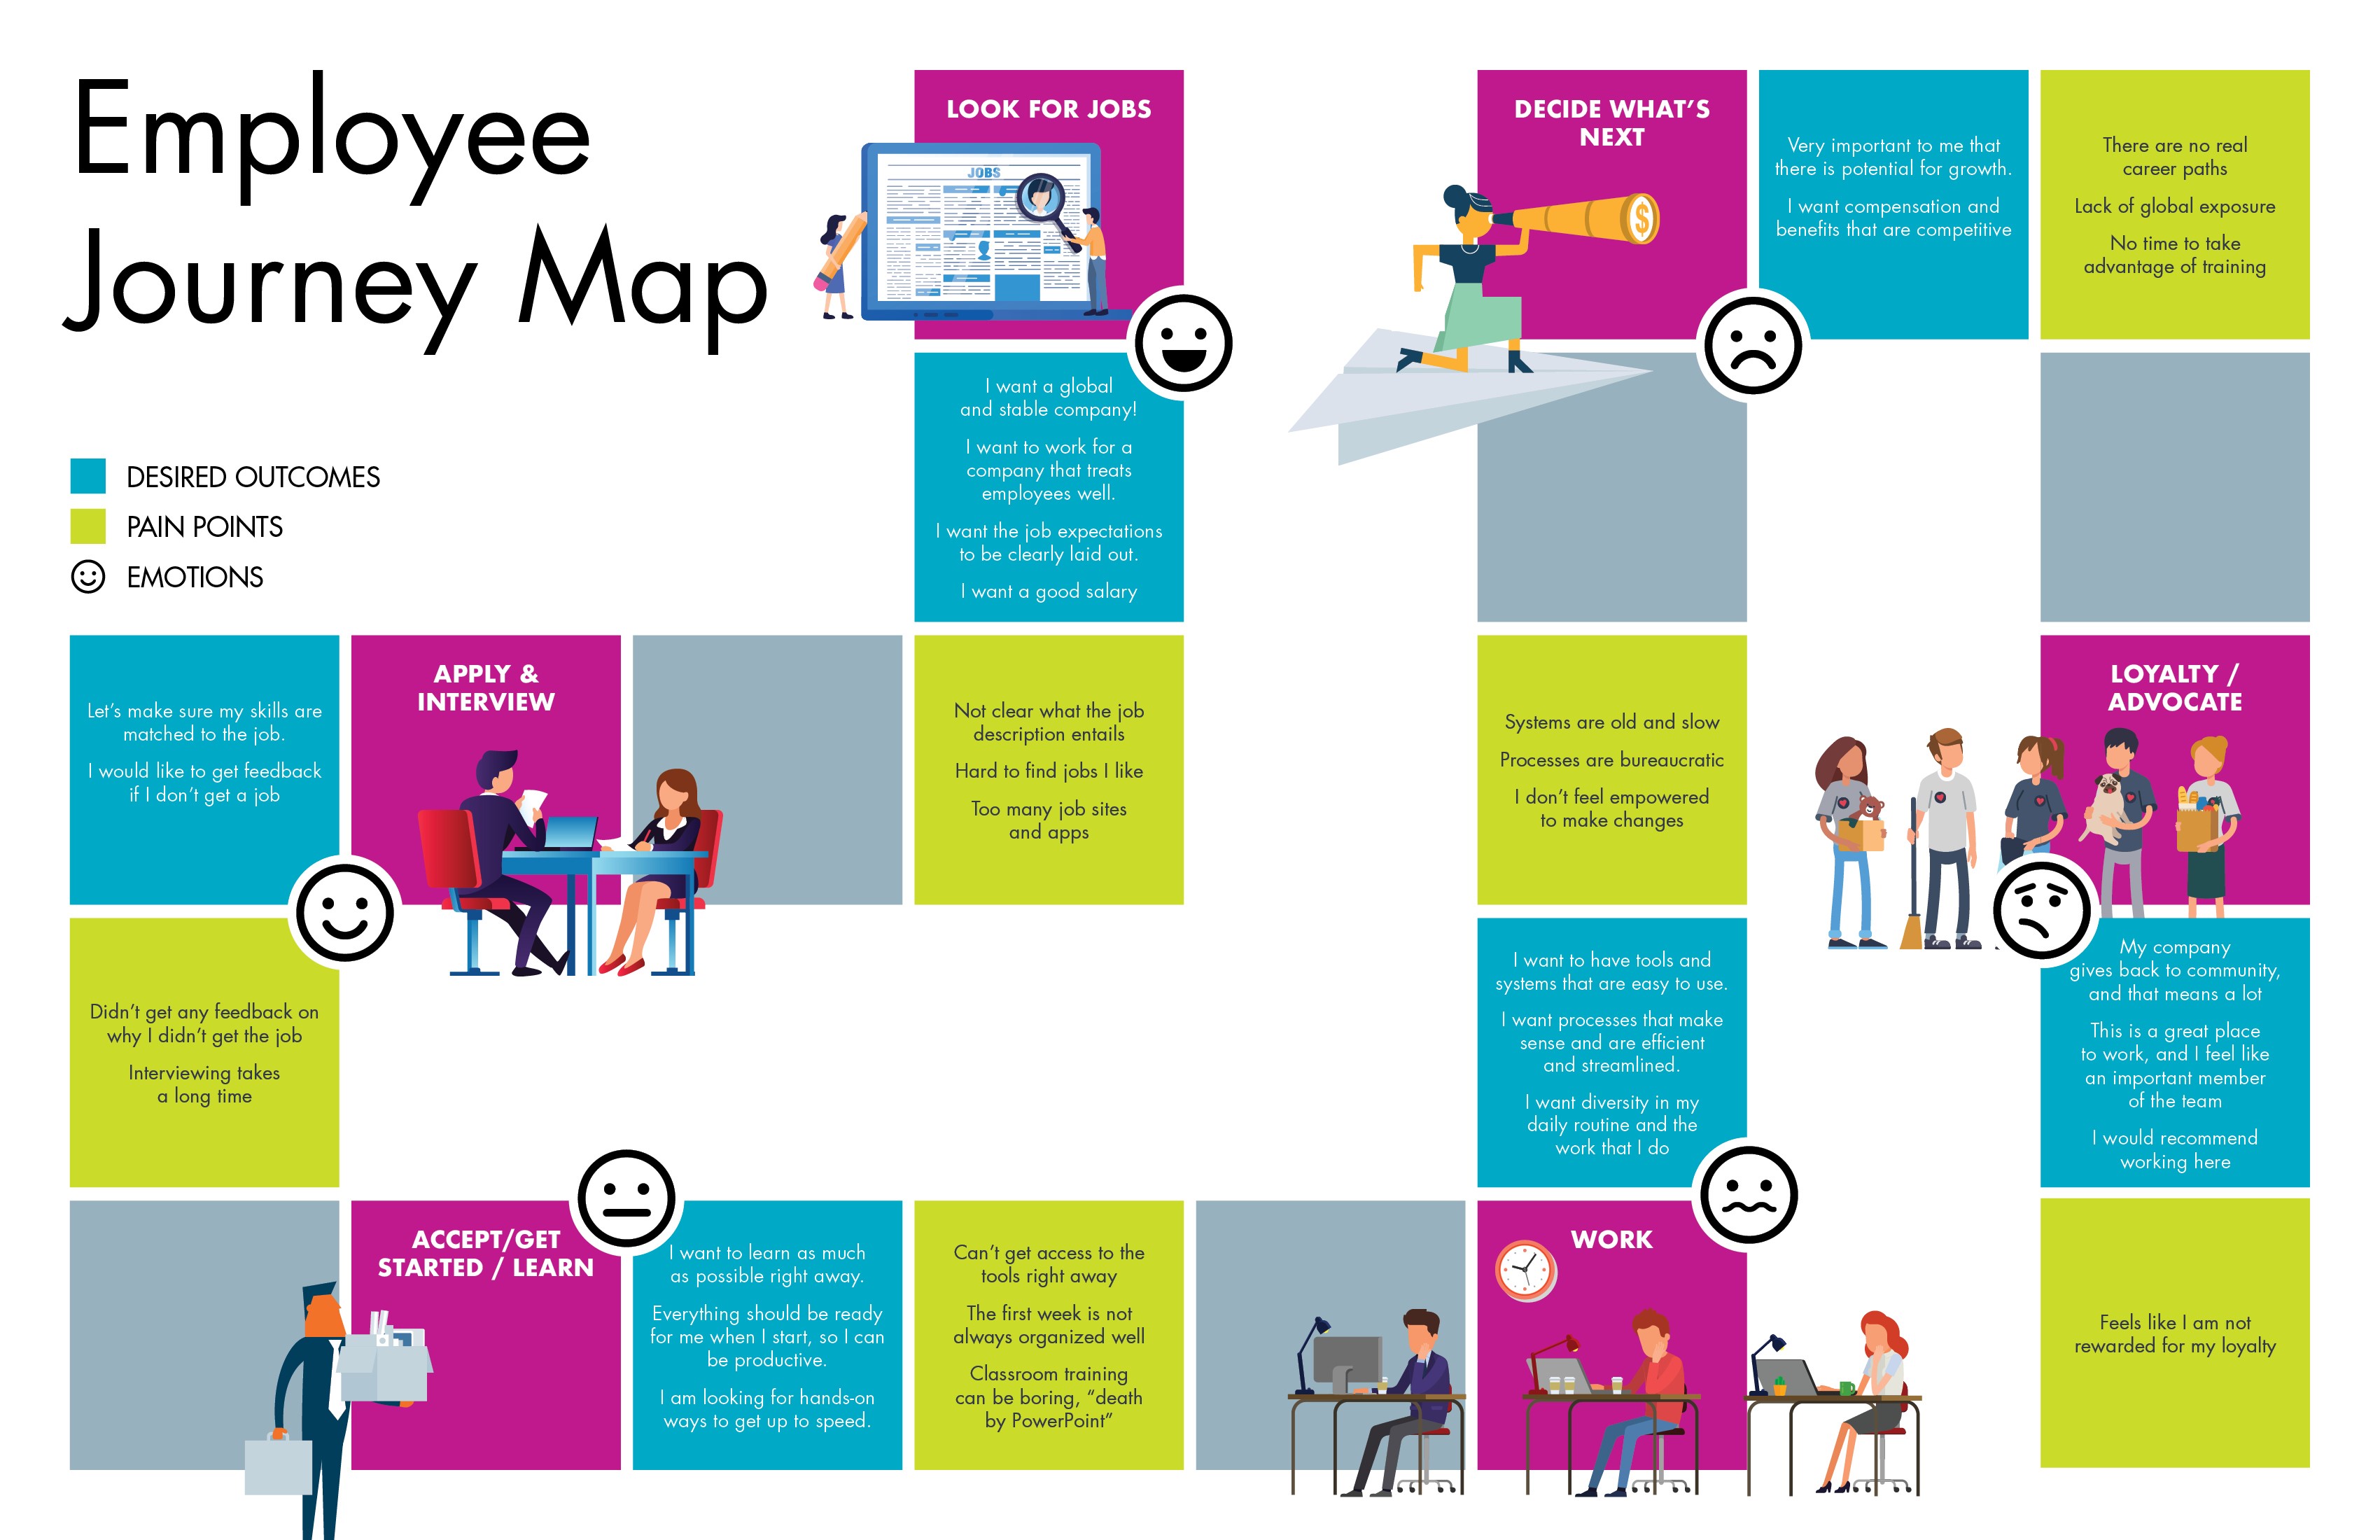 employee journey mapping process